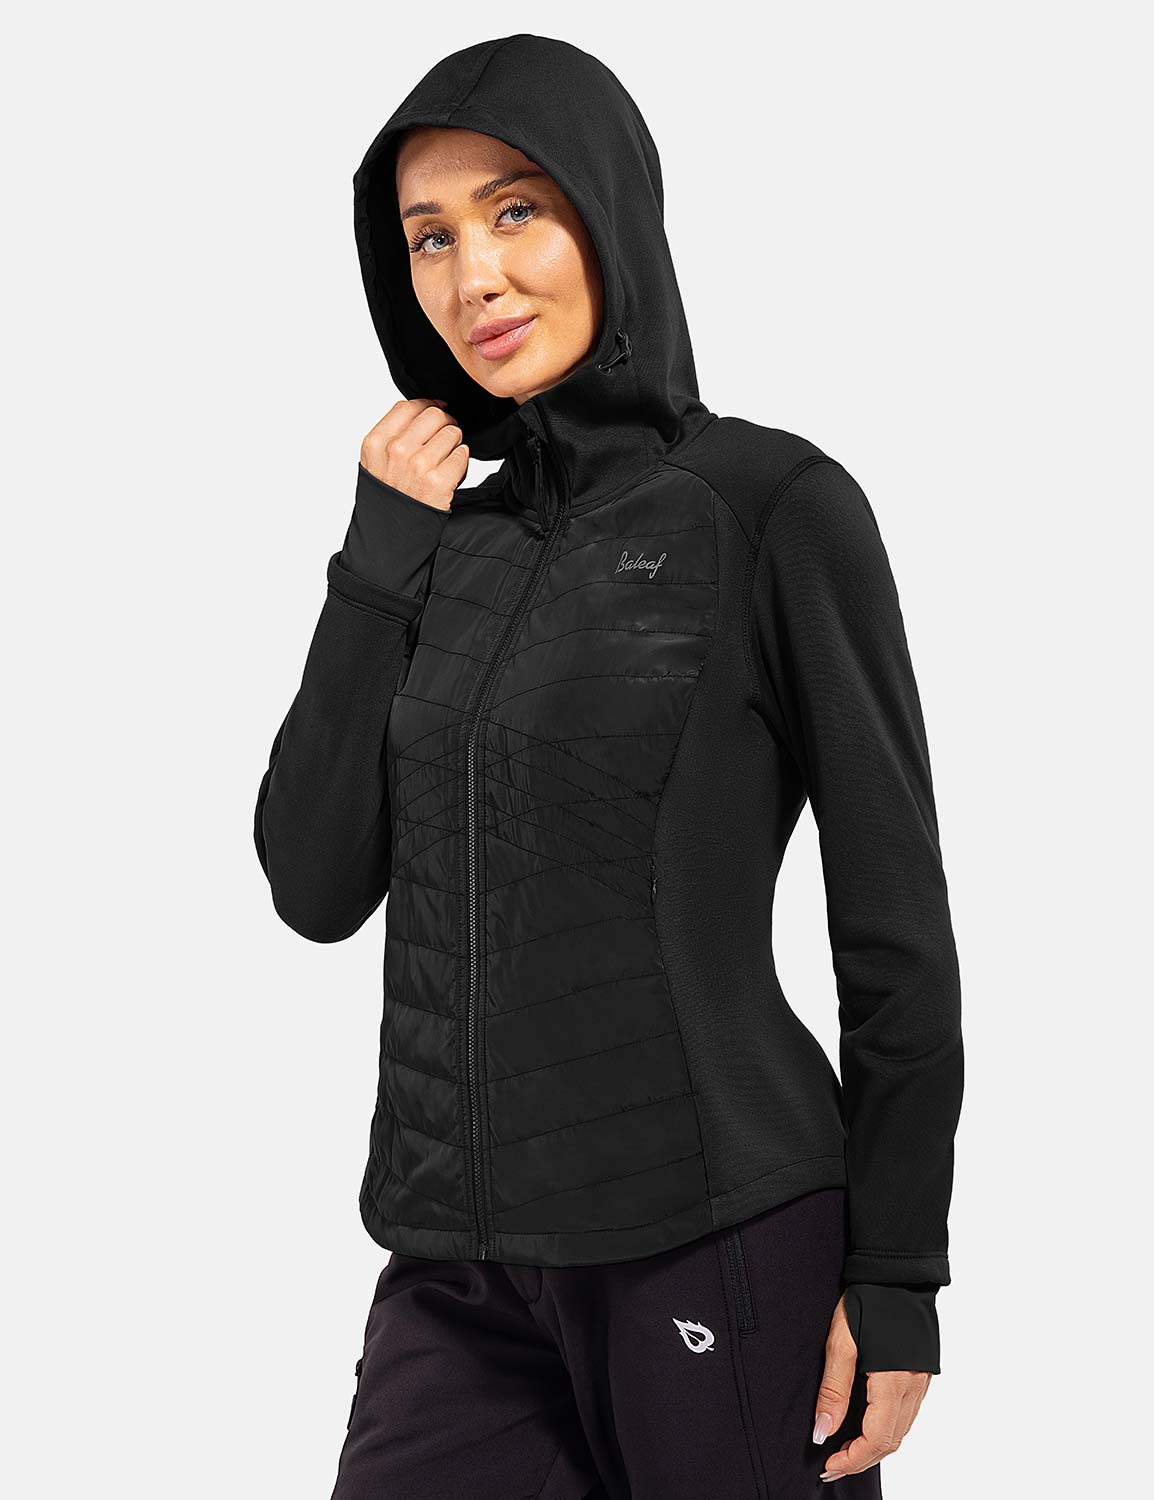 Baleaf Women's Triumph Thermal Water-Resistant Hooded Jacket cga030 Black Side